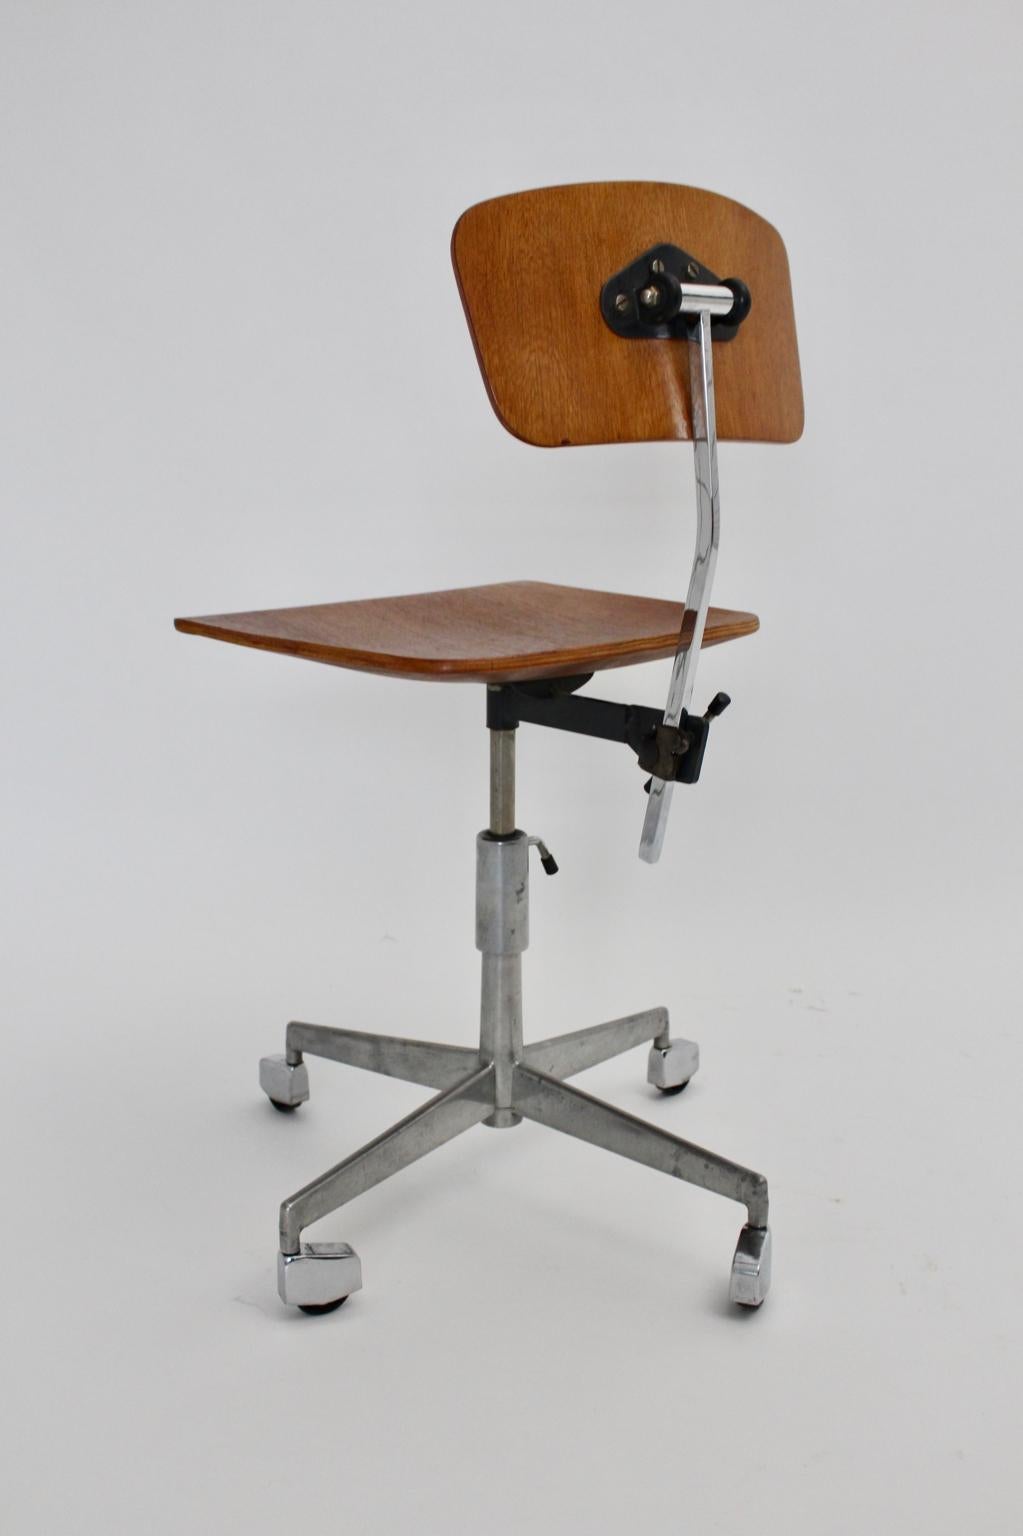 20ième siècle The Moderns Modern Vintage Brown Beeche Desk Chair Jorgen Rasmussen 1950s Denmark en vente